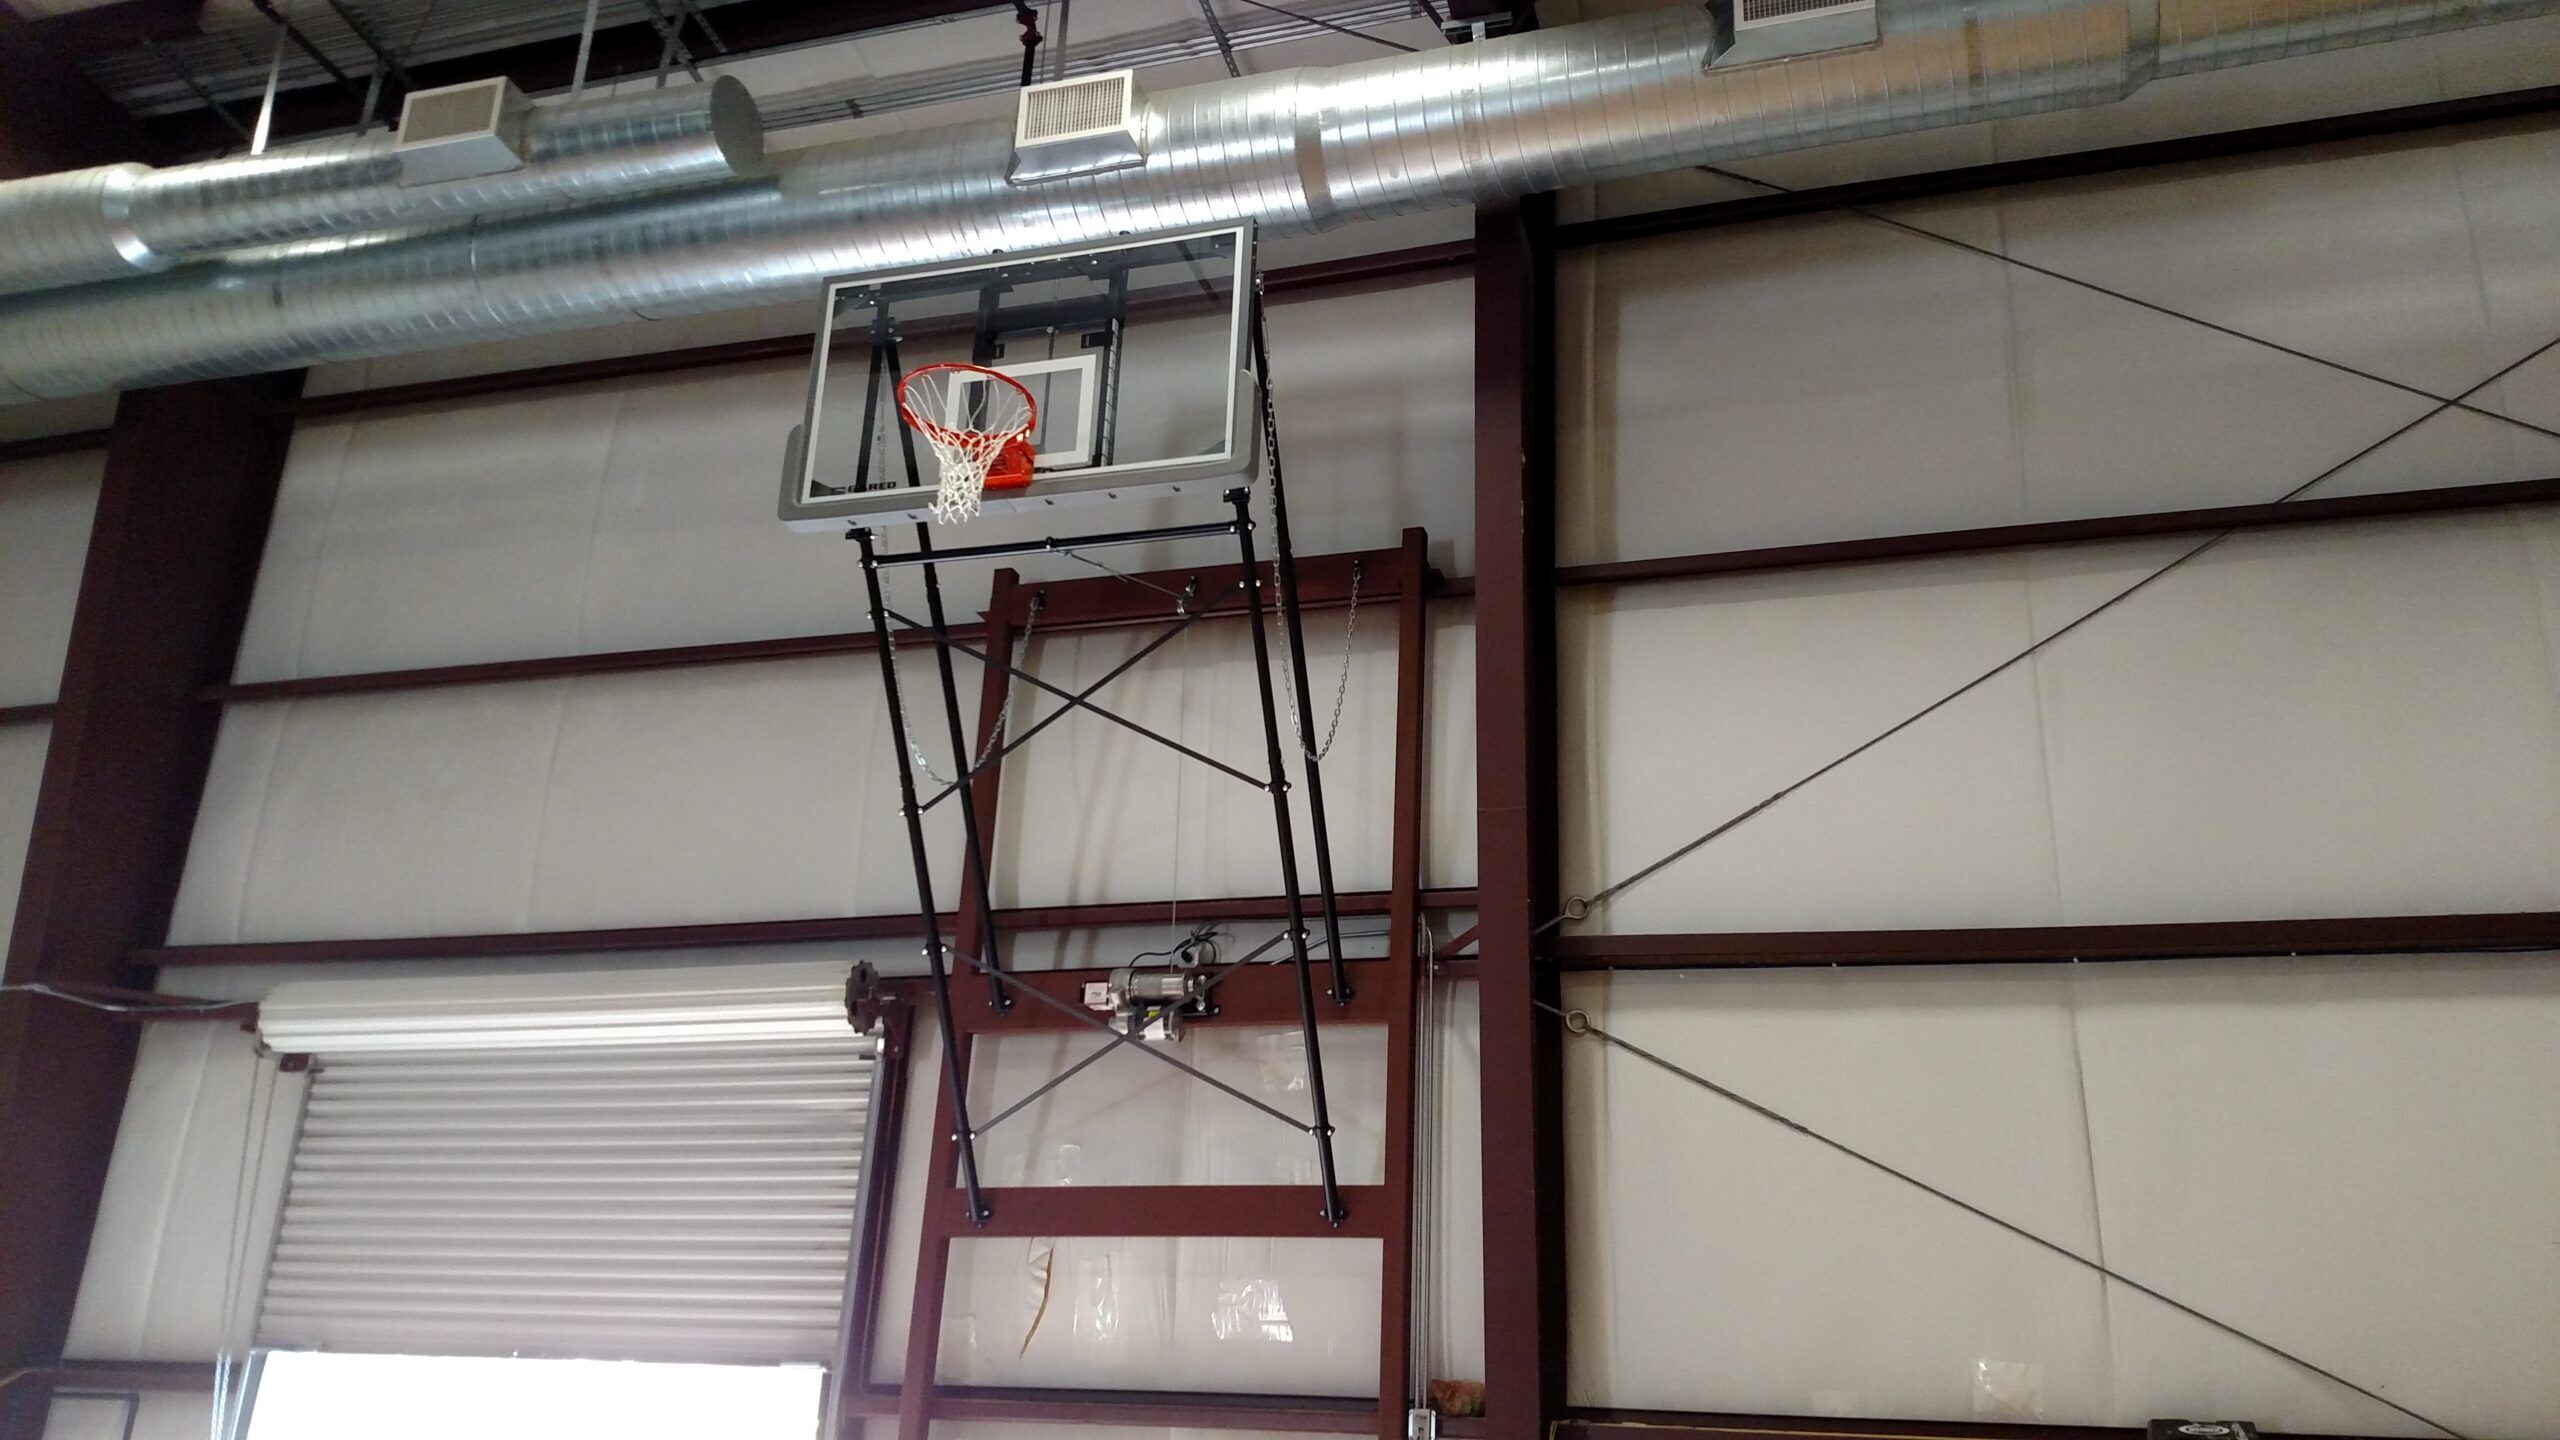 Side Fold Wall Mount Basketball Goal - South Texas Sport Court